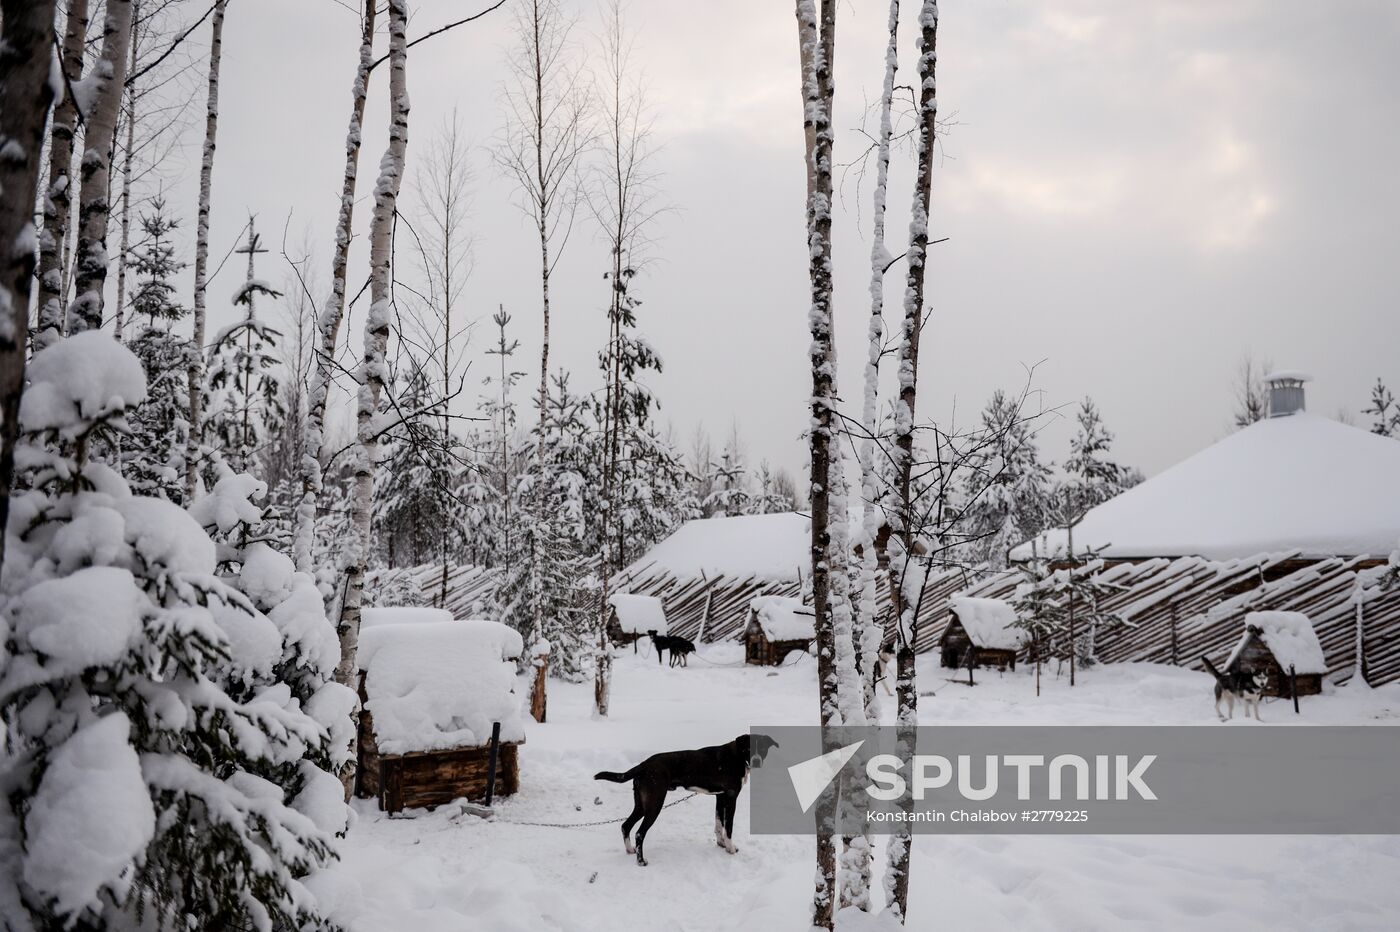 Sled dog breeding facility in Karelia